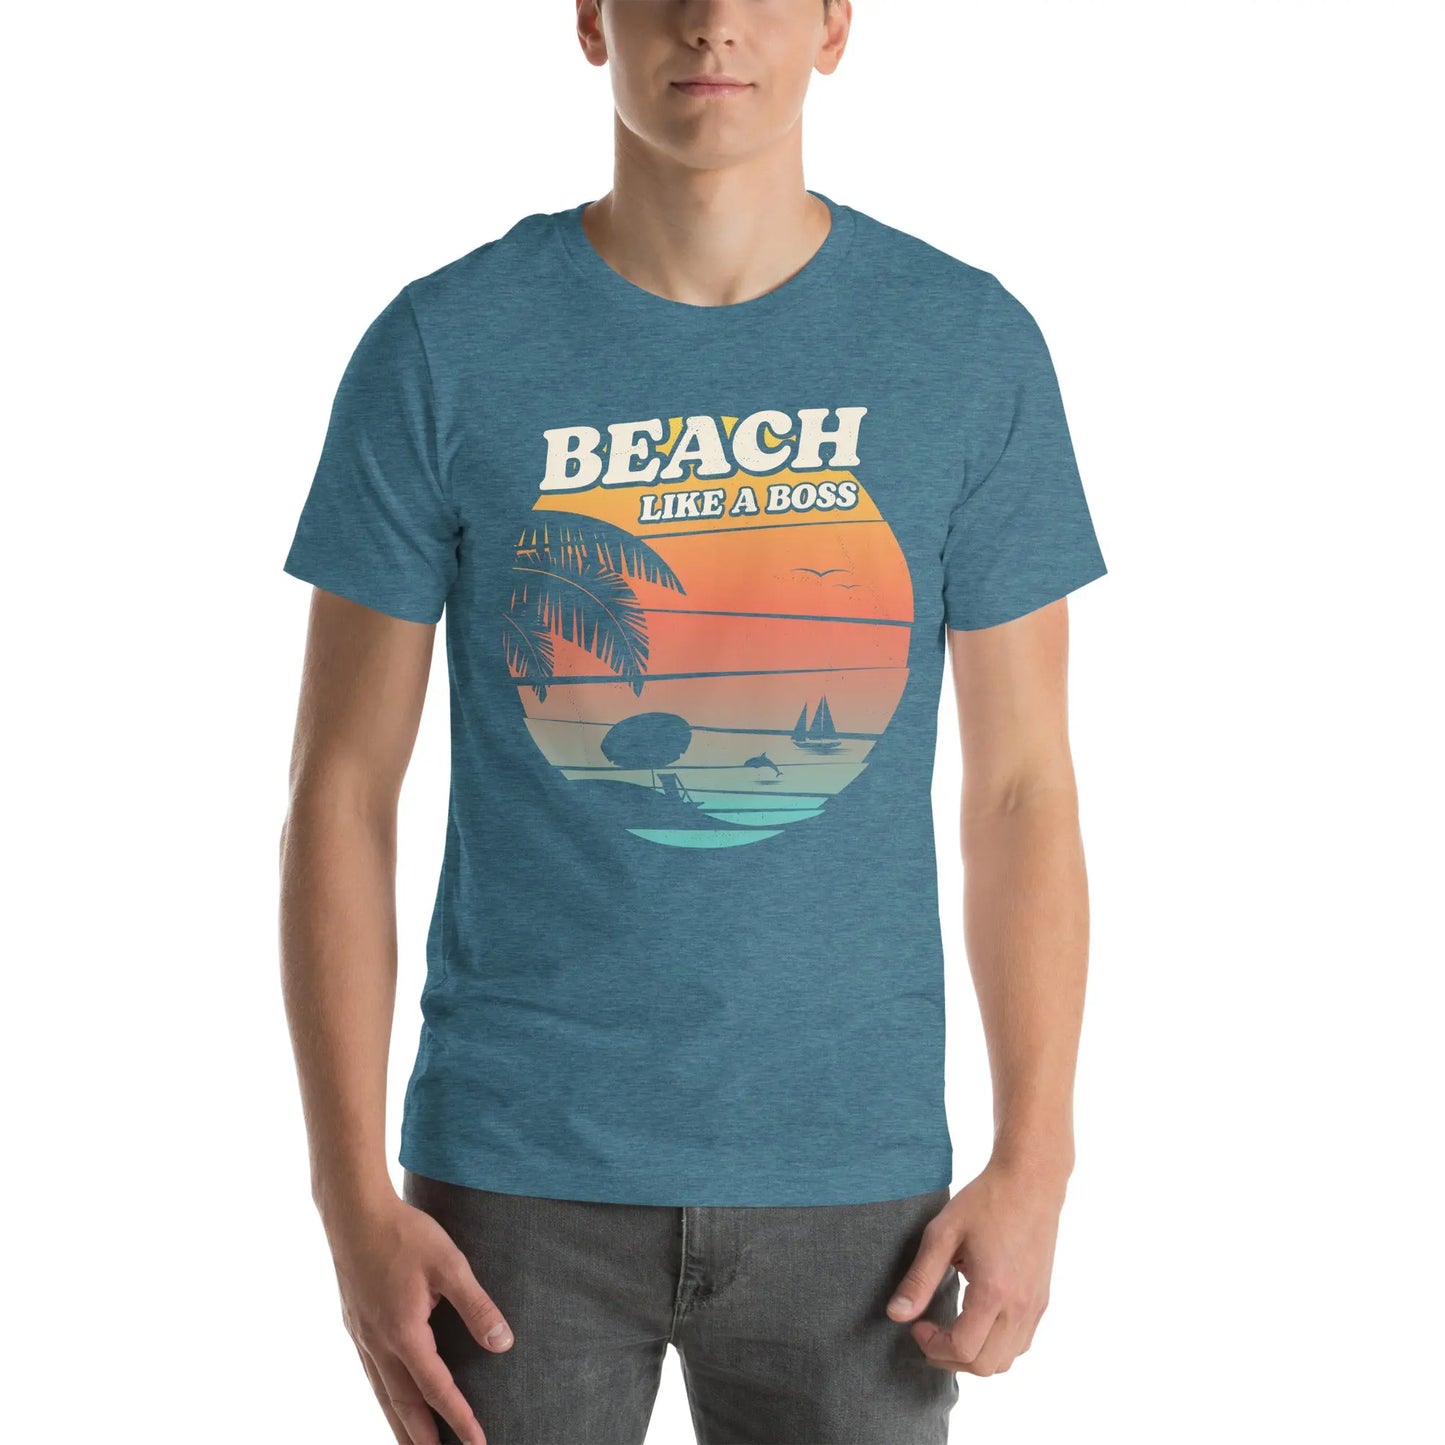 Beach Like a Boss with this Coastal Adult Unisex T-Shirt - Coastal Journeyz2938635_8481